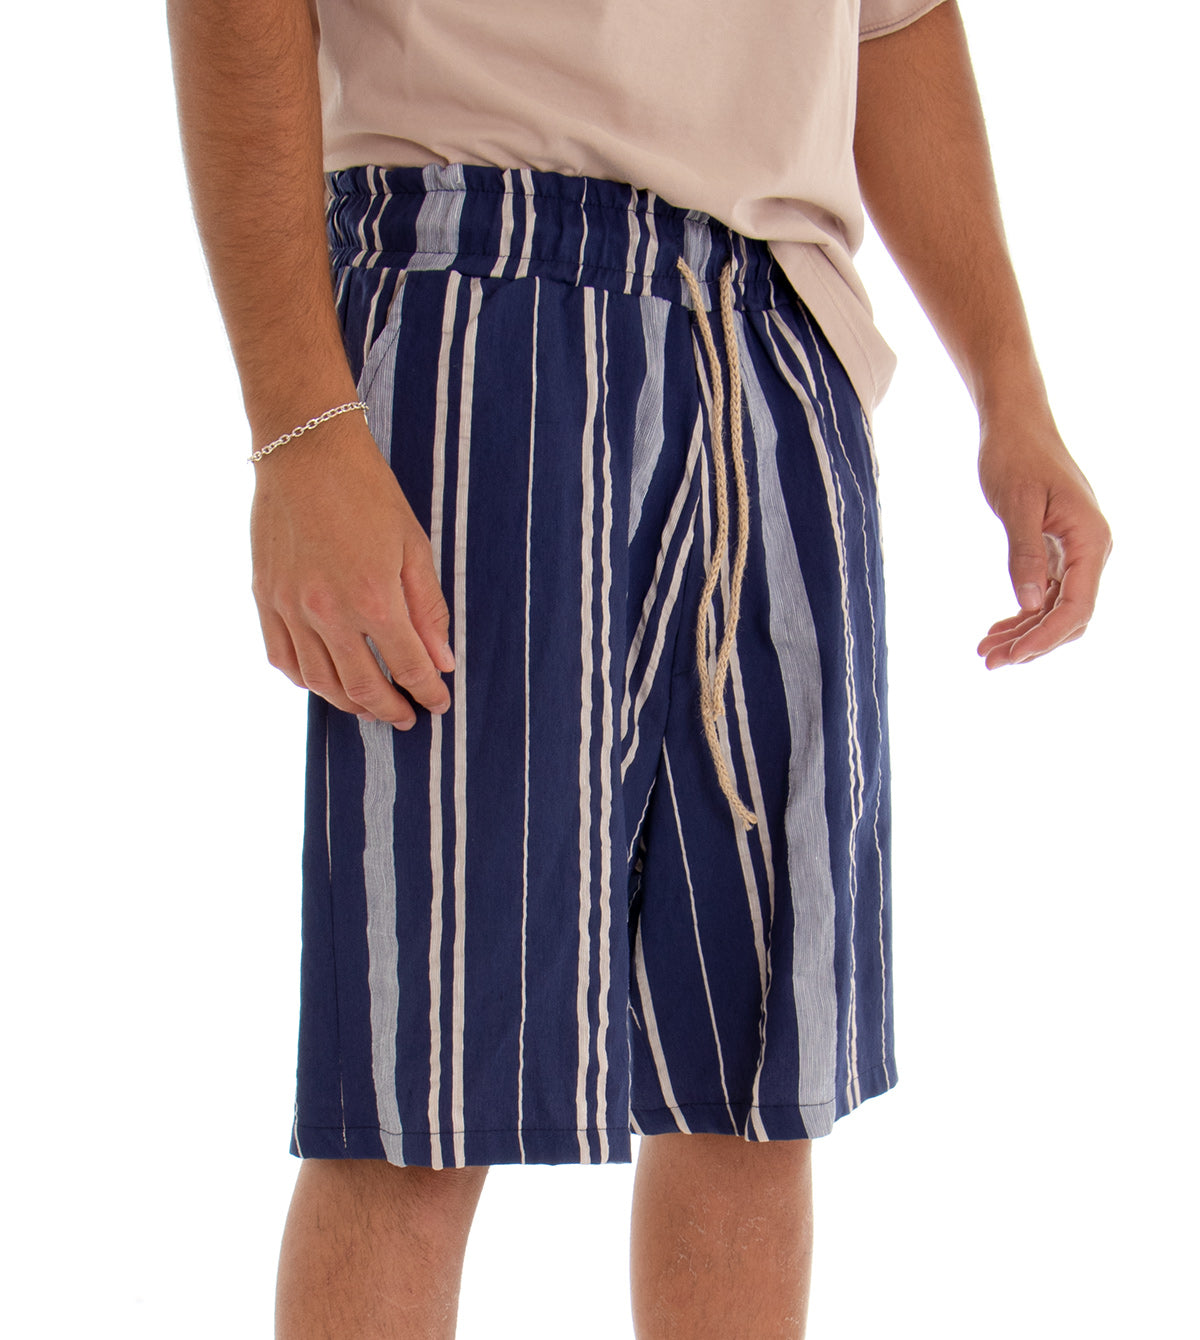 Bermuda Pantaloncino Uomo Shorts Rigato Blu Elastico GIOSAL-PC1544A